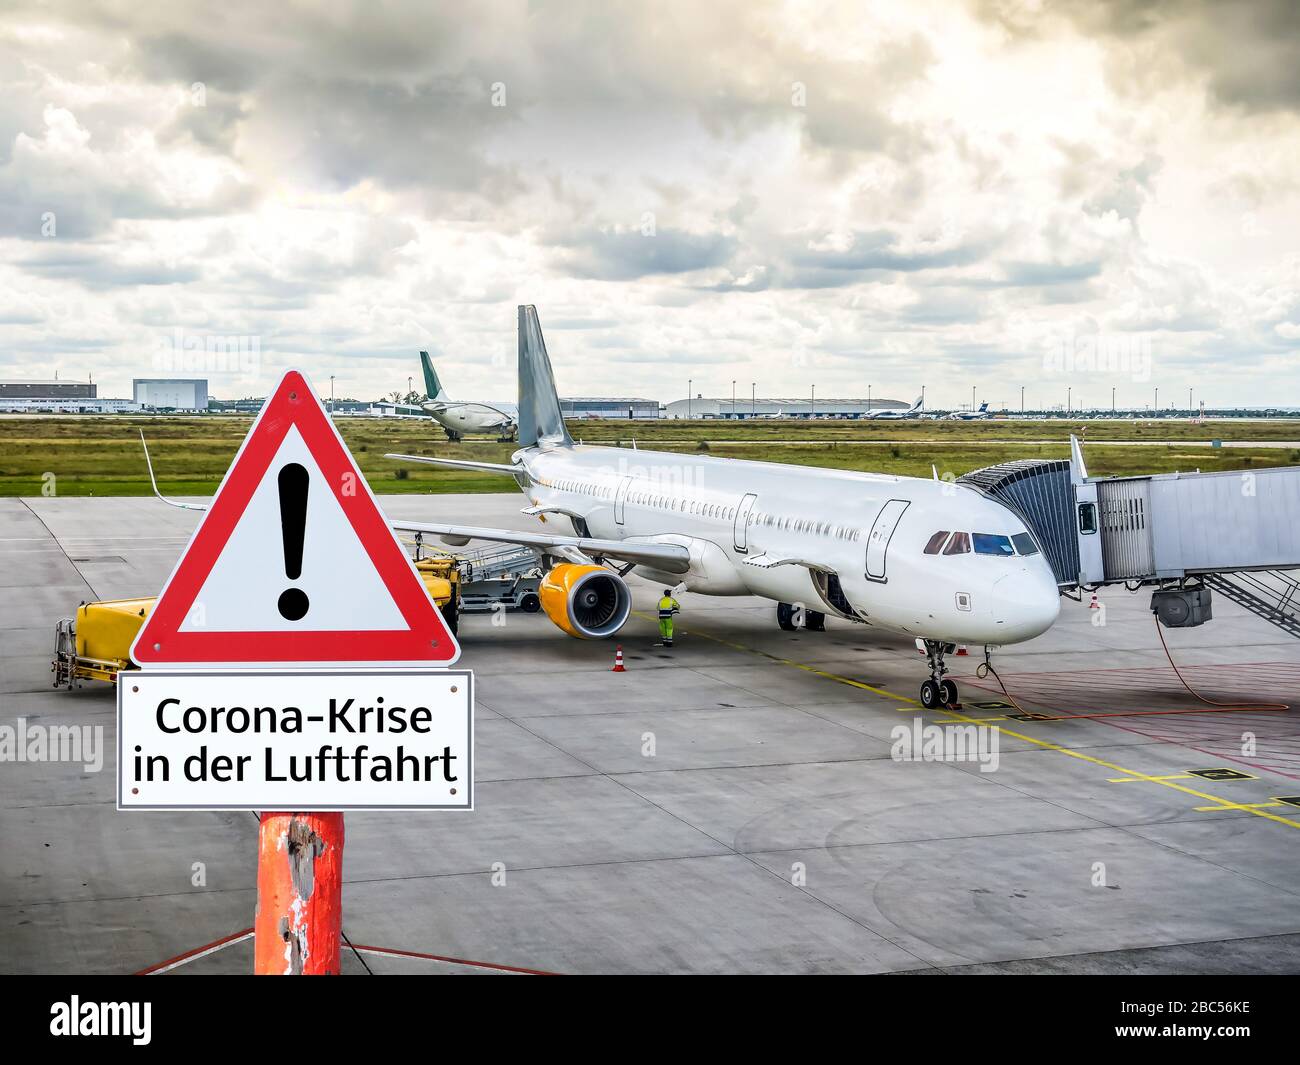 Corona crisis warning sign in aviation in german Stock Photo